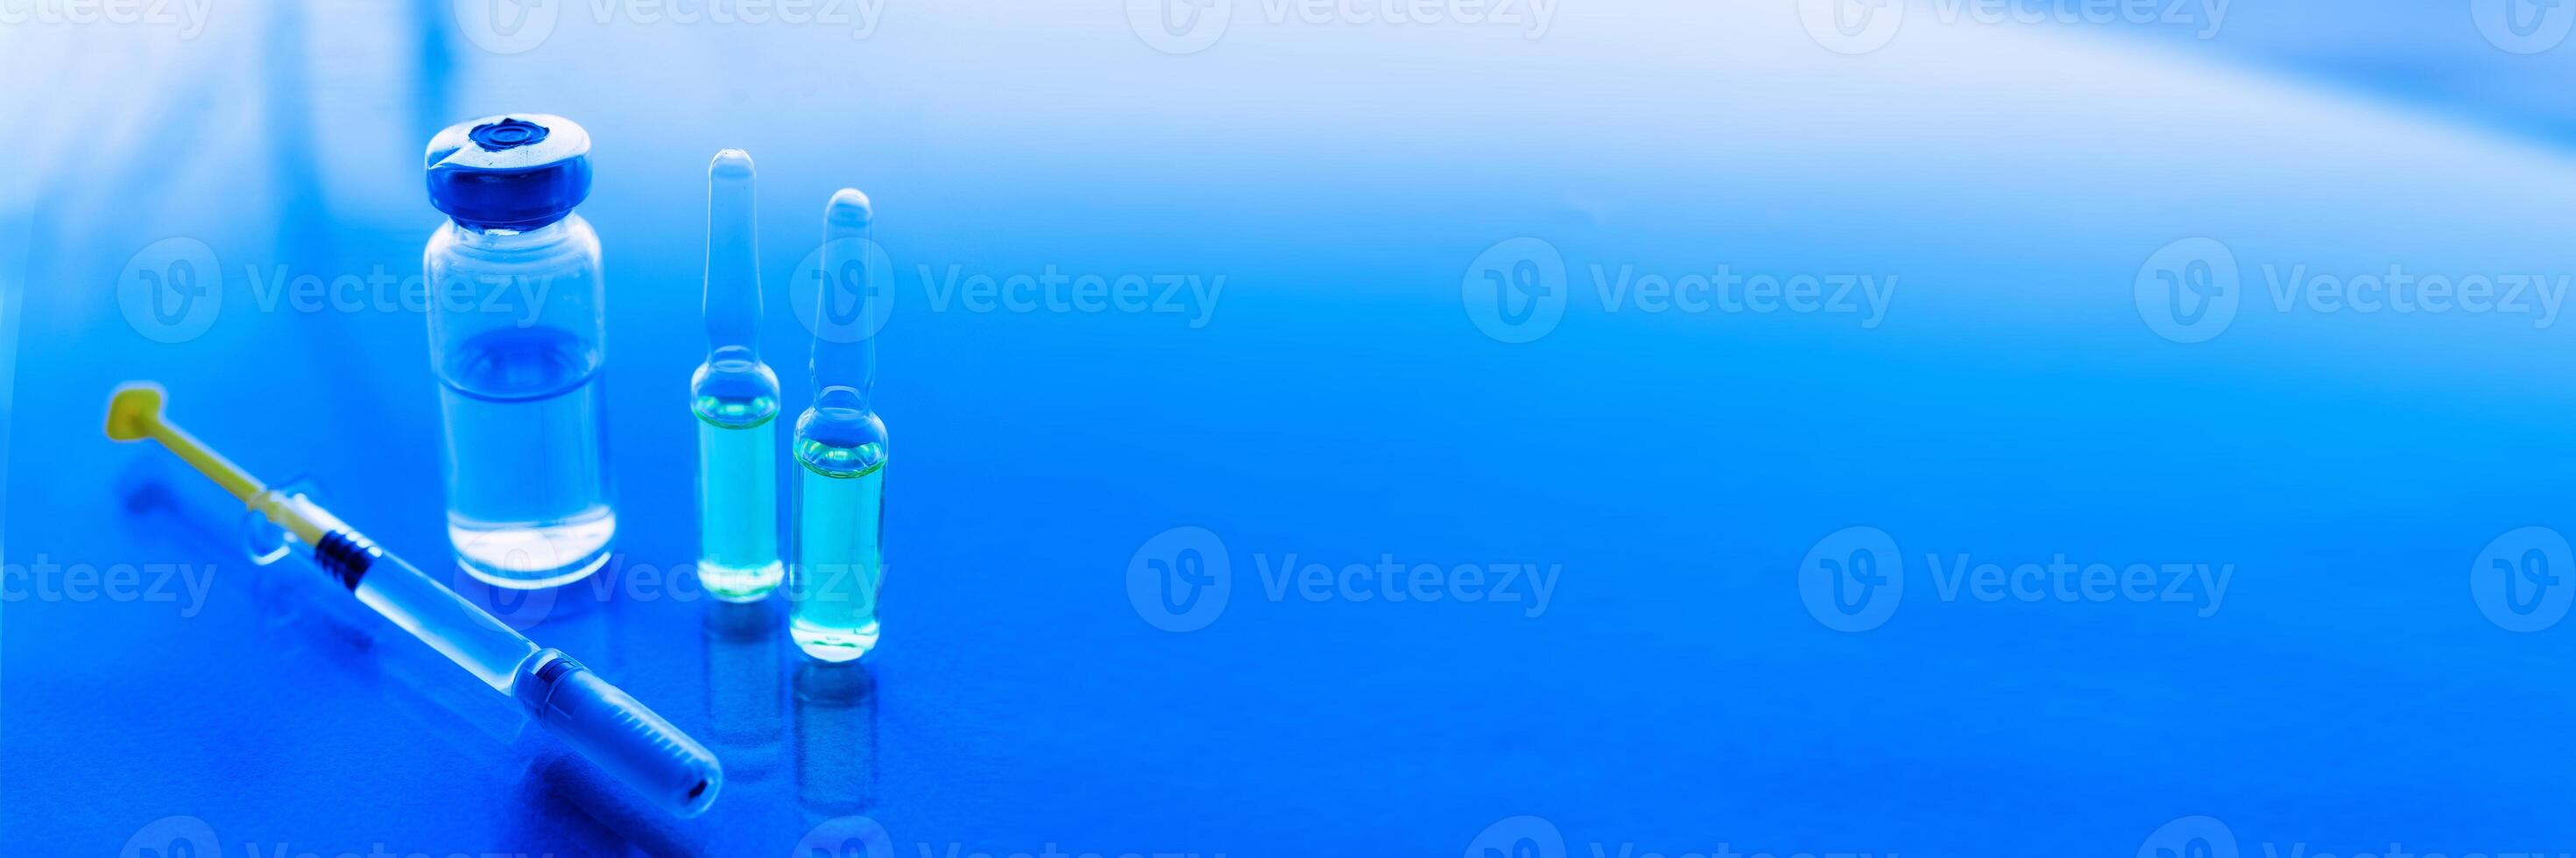 sprutor, medicin flaskor på en blå bakgrund foto